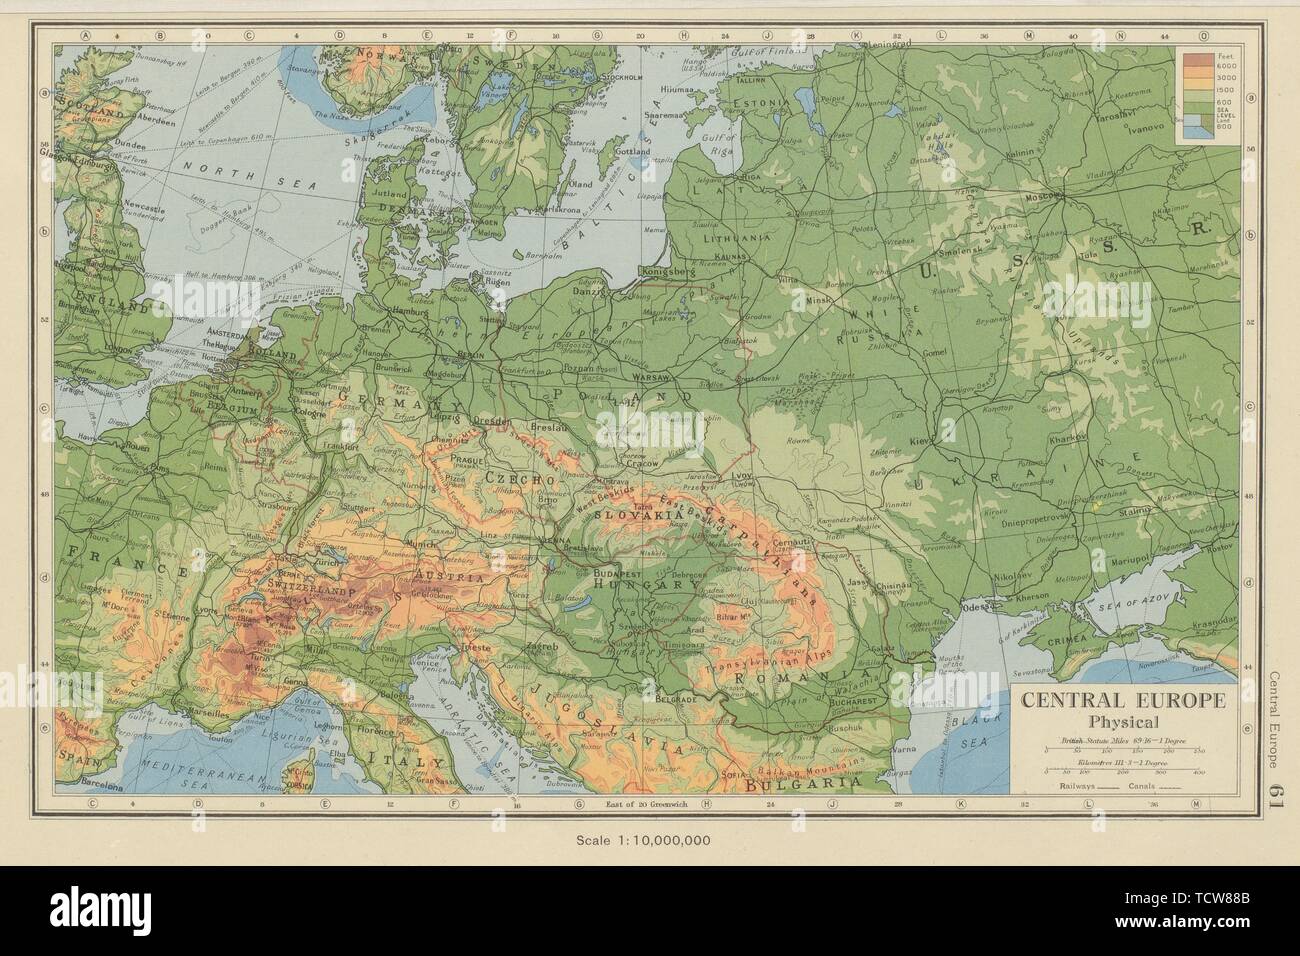 CENTRAL EUROPE Physical. Post World War 2 borders. BARTHOLOMEW 1947 old map Stock Photo